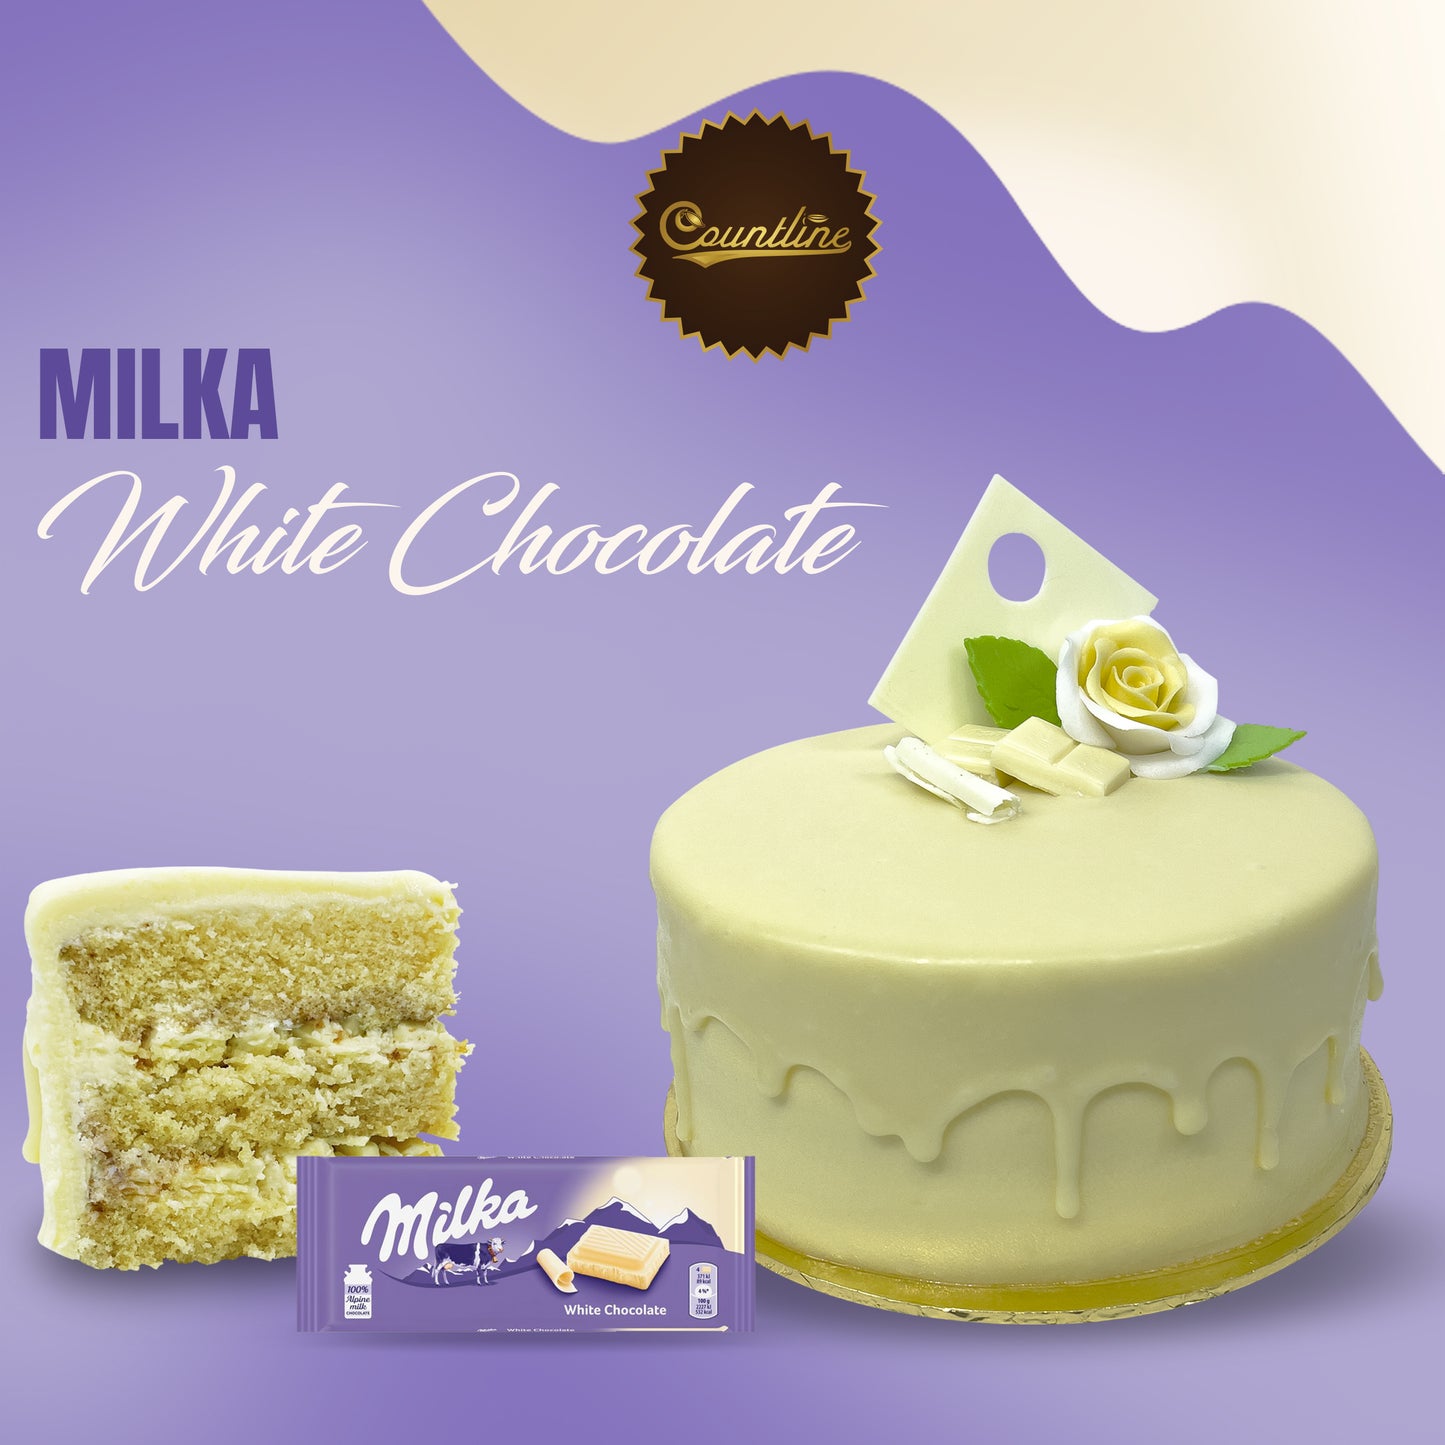 Milka White Chocolate cake